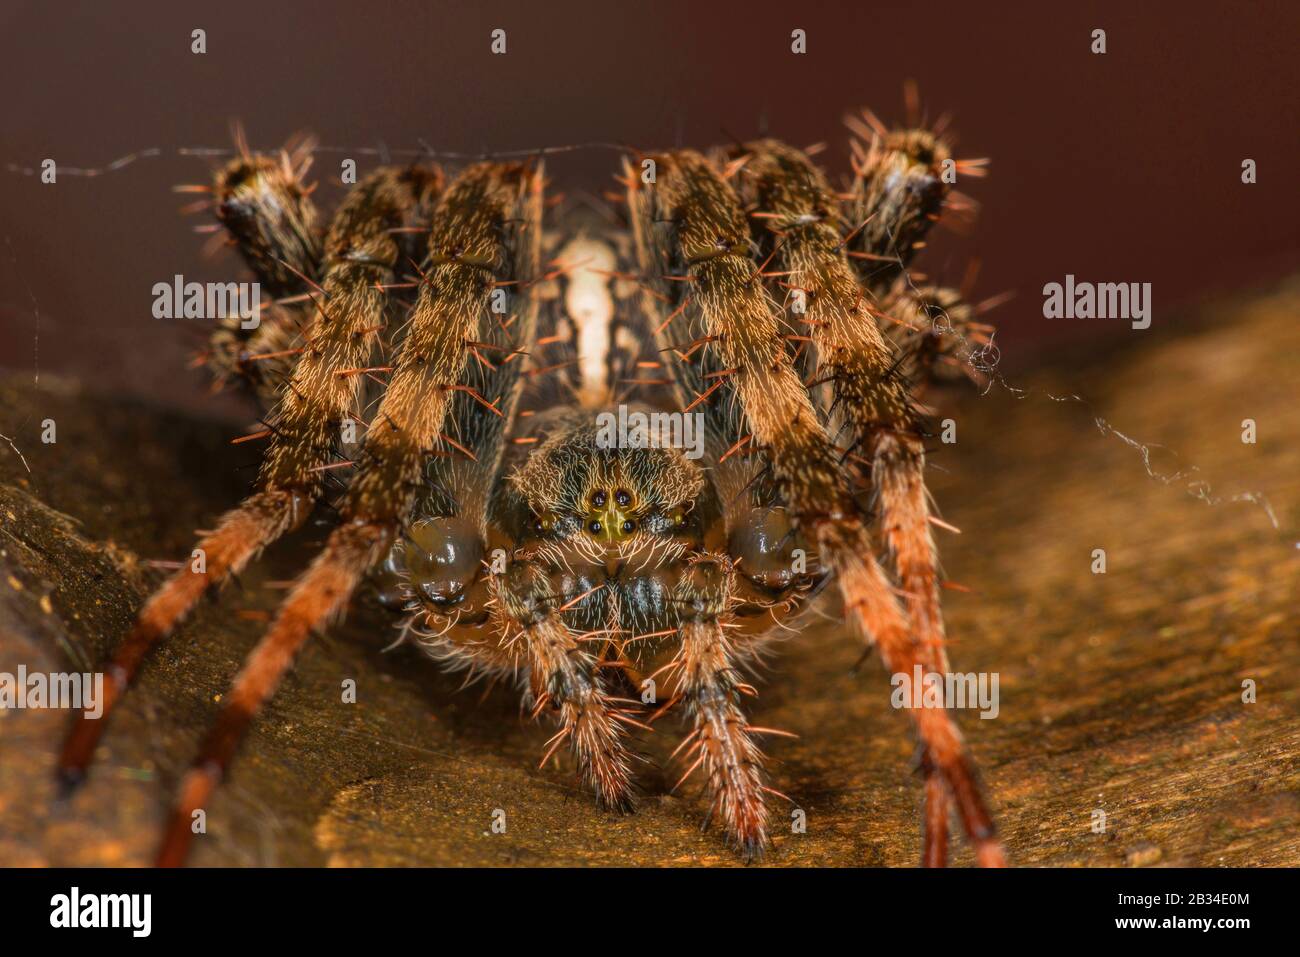 cross orbweaver, European garden spider, cross spider (Araneus diadematus), frontal view, Germany Stock Photo